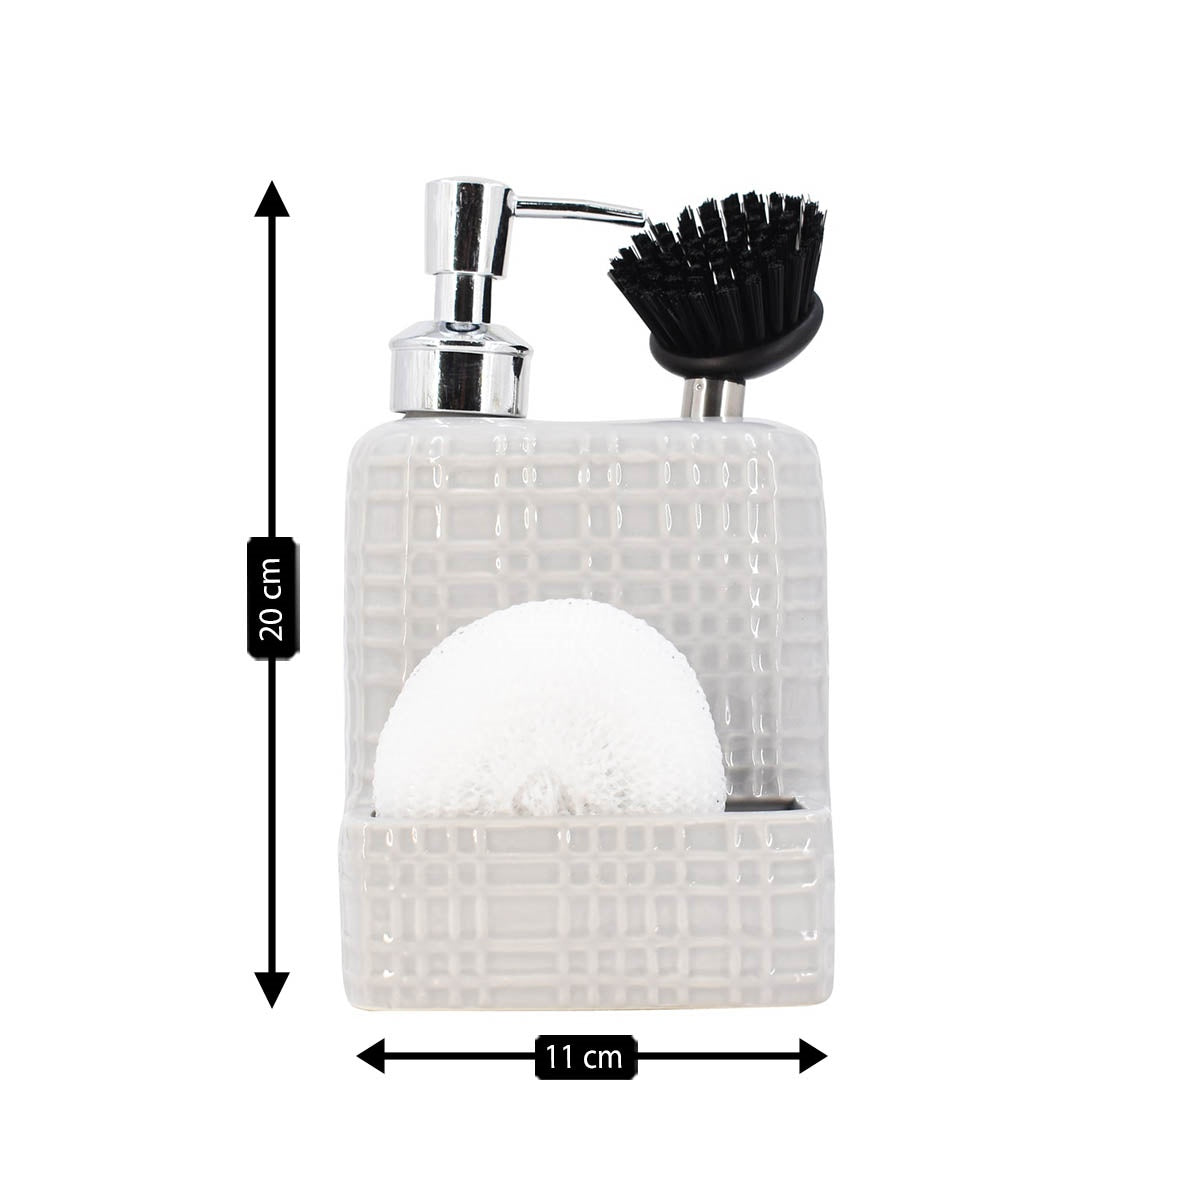 Ceramic Soap Dispenser handwash Pump for Bathroom, Set of 1, Grey (8212)